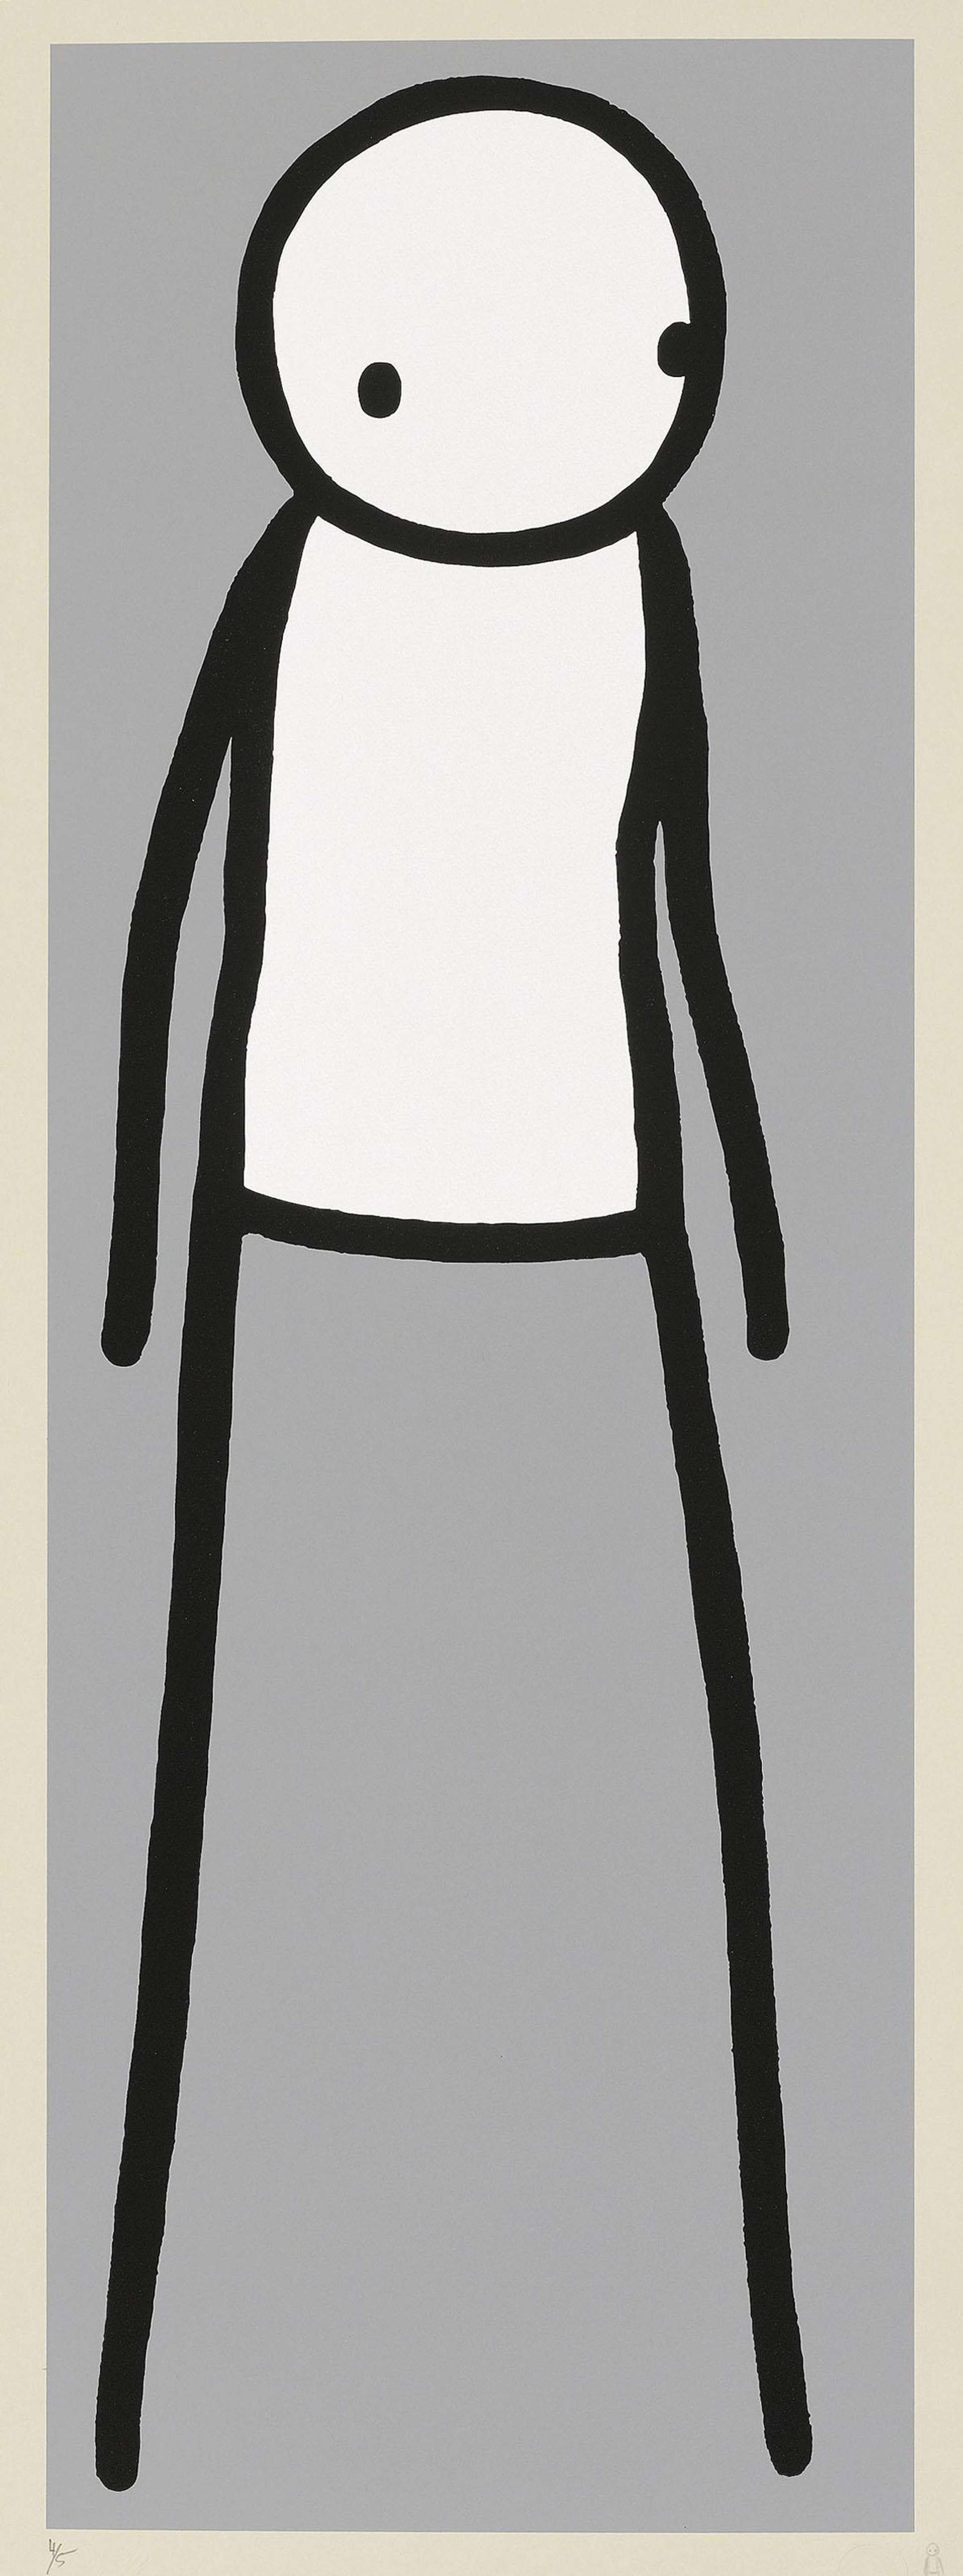 STIK’s Walk (grey). A screenprint of a stick figure standing up against a grey background